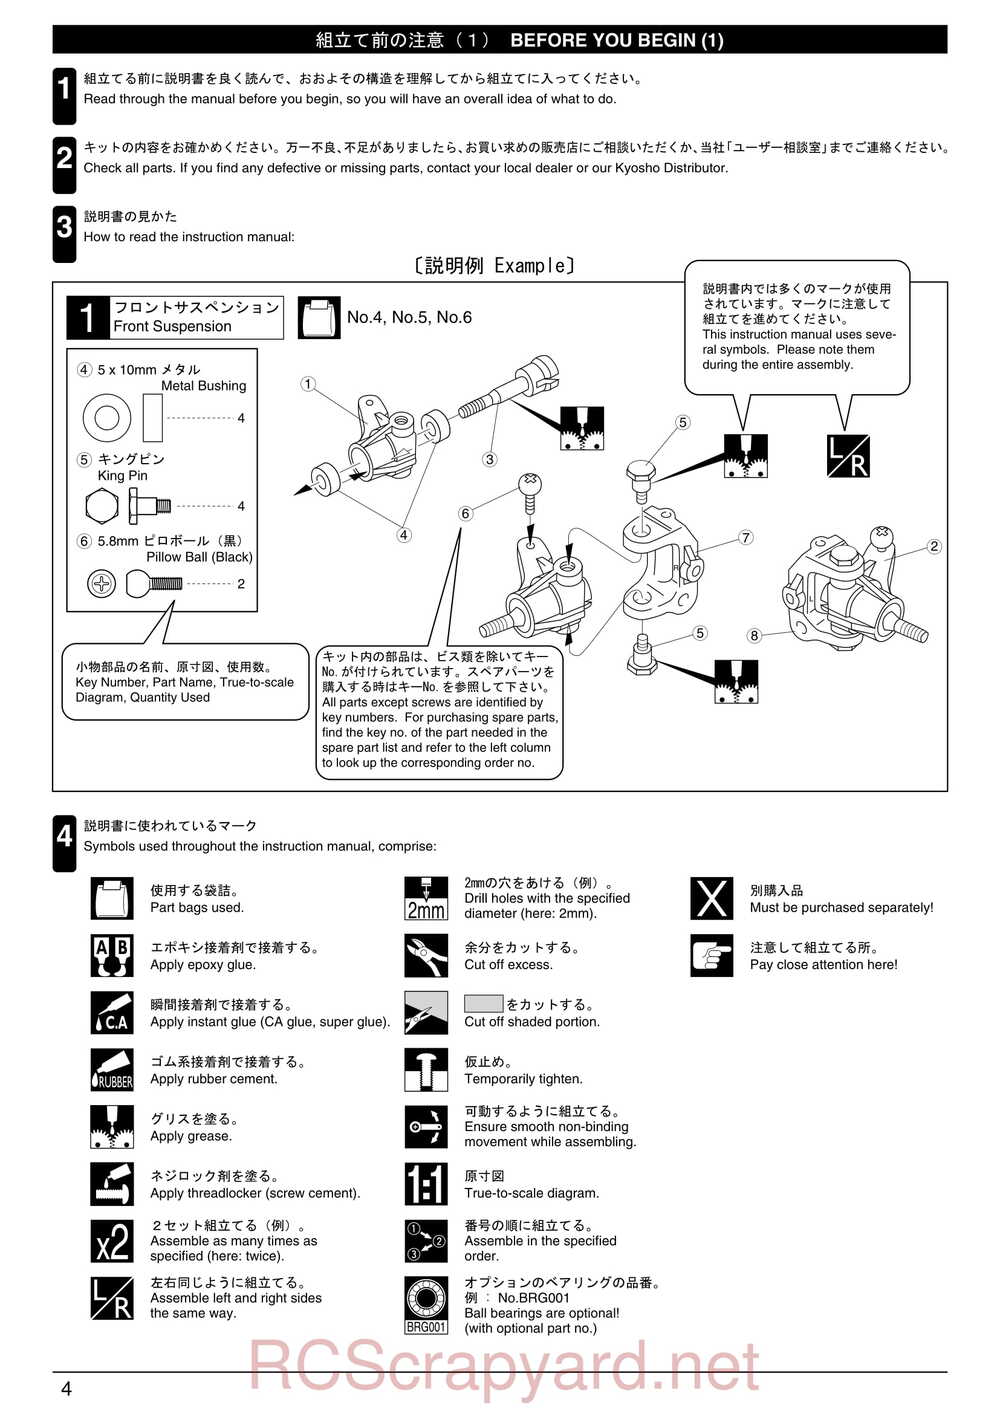 Kyosho - 31192 - Inferno-MP-7-5 Sports - Manual - Page 04